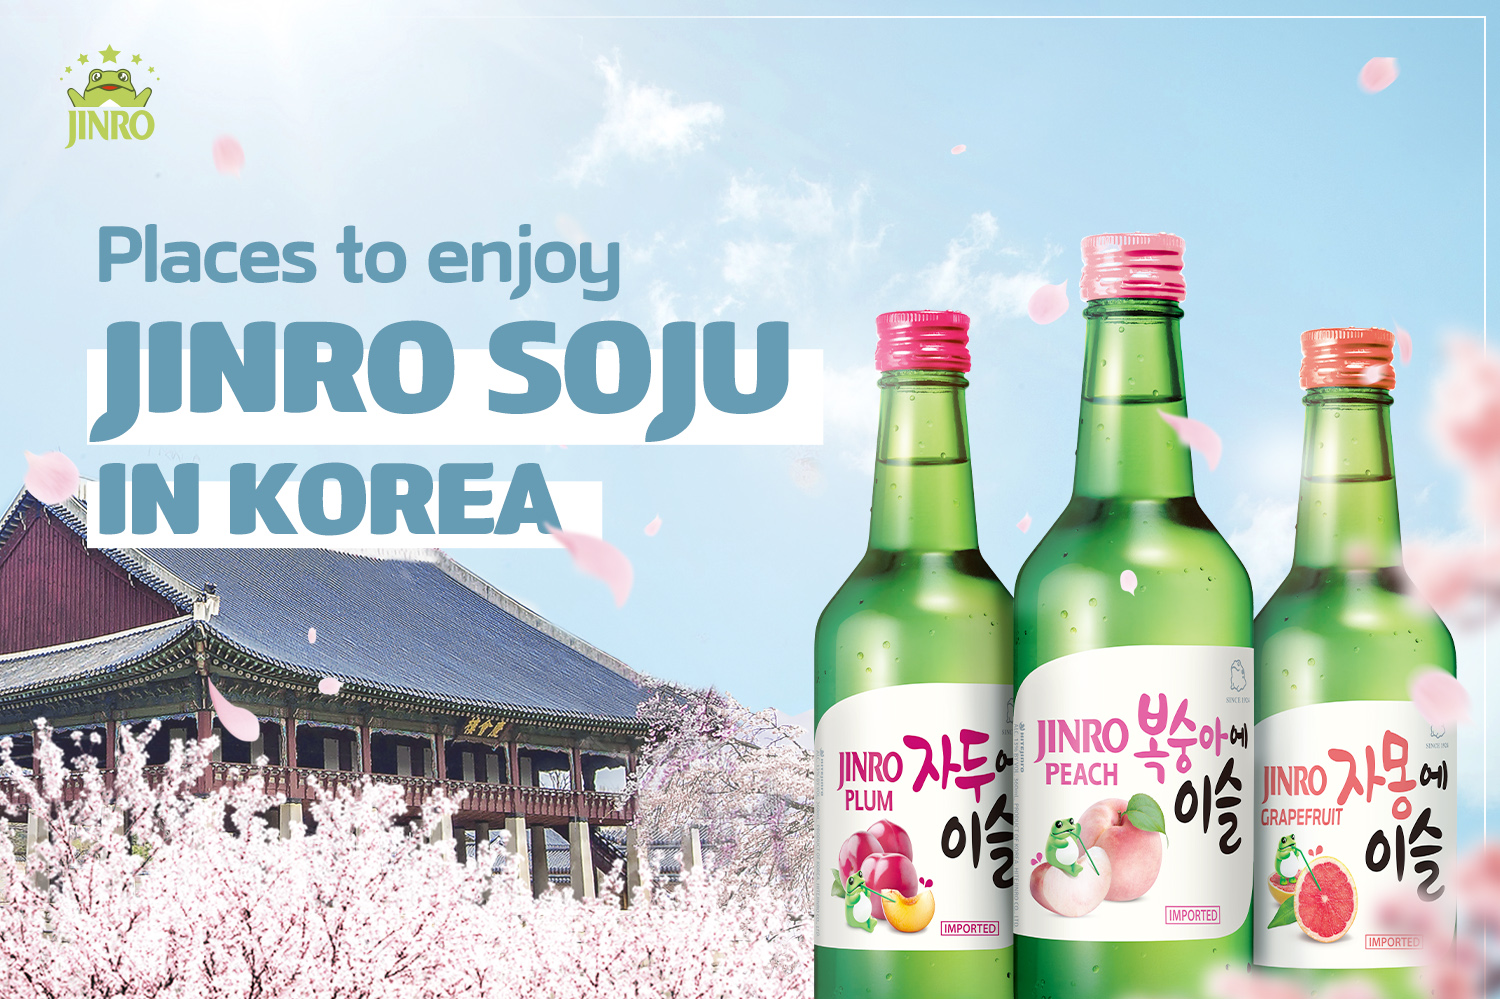 Places to enjoy JINRO Soju in Korea